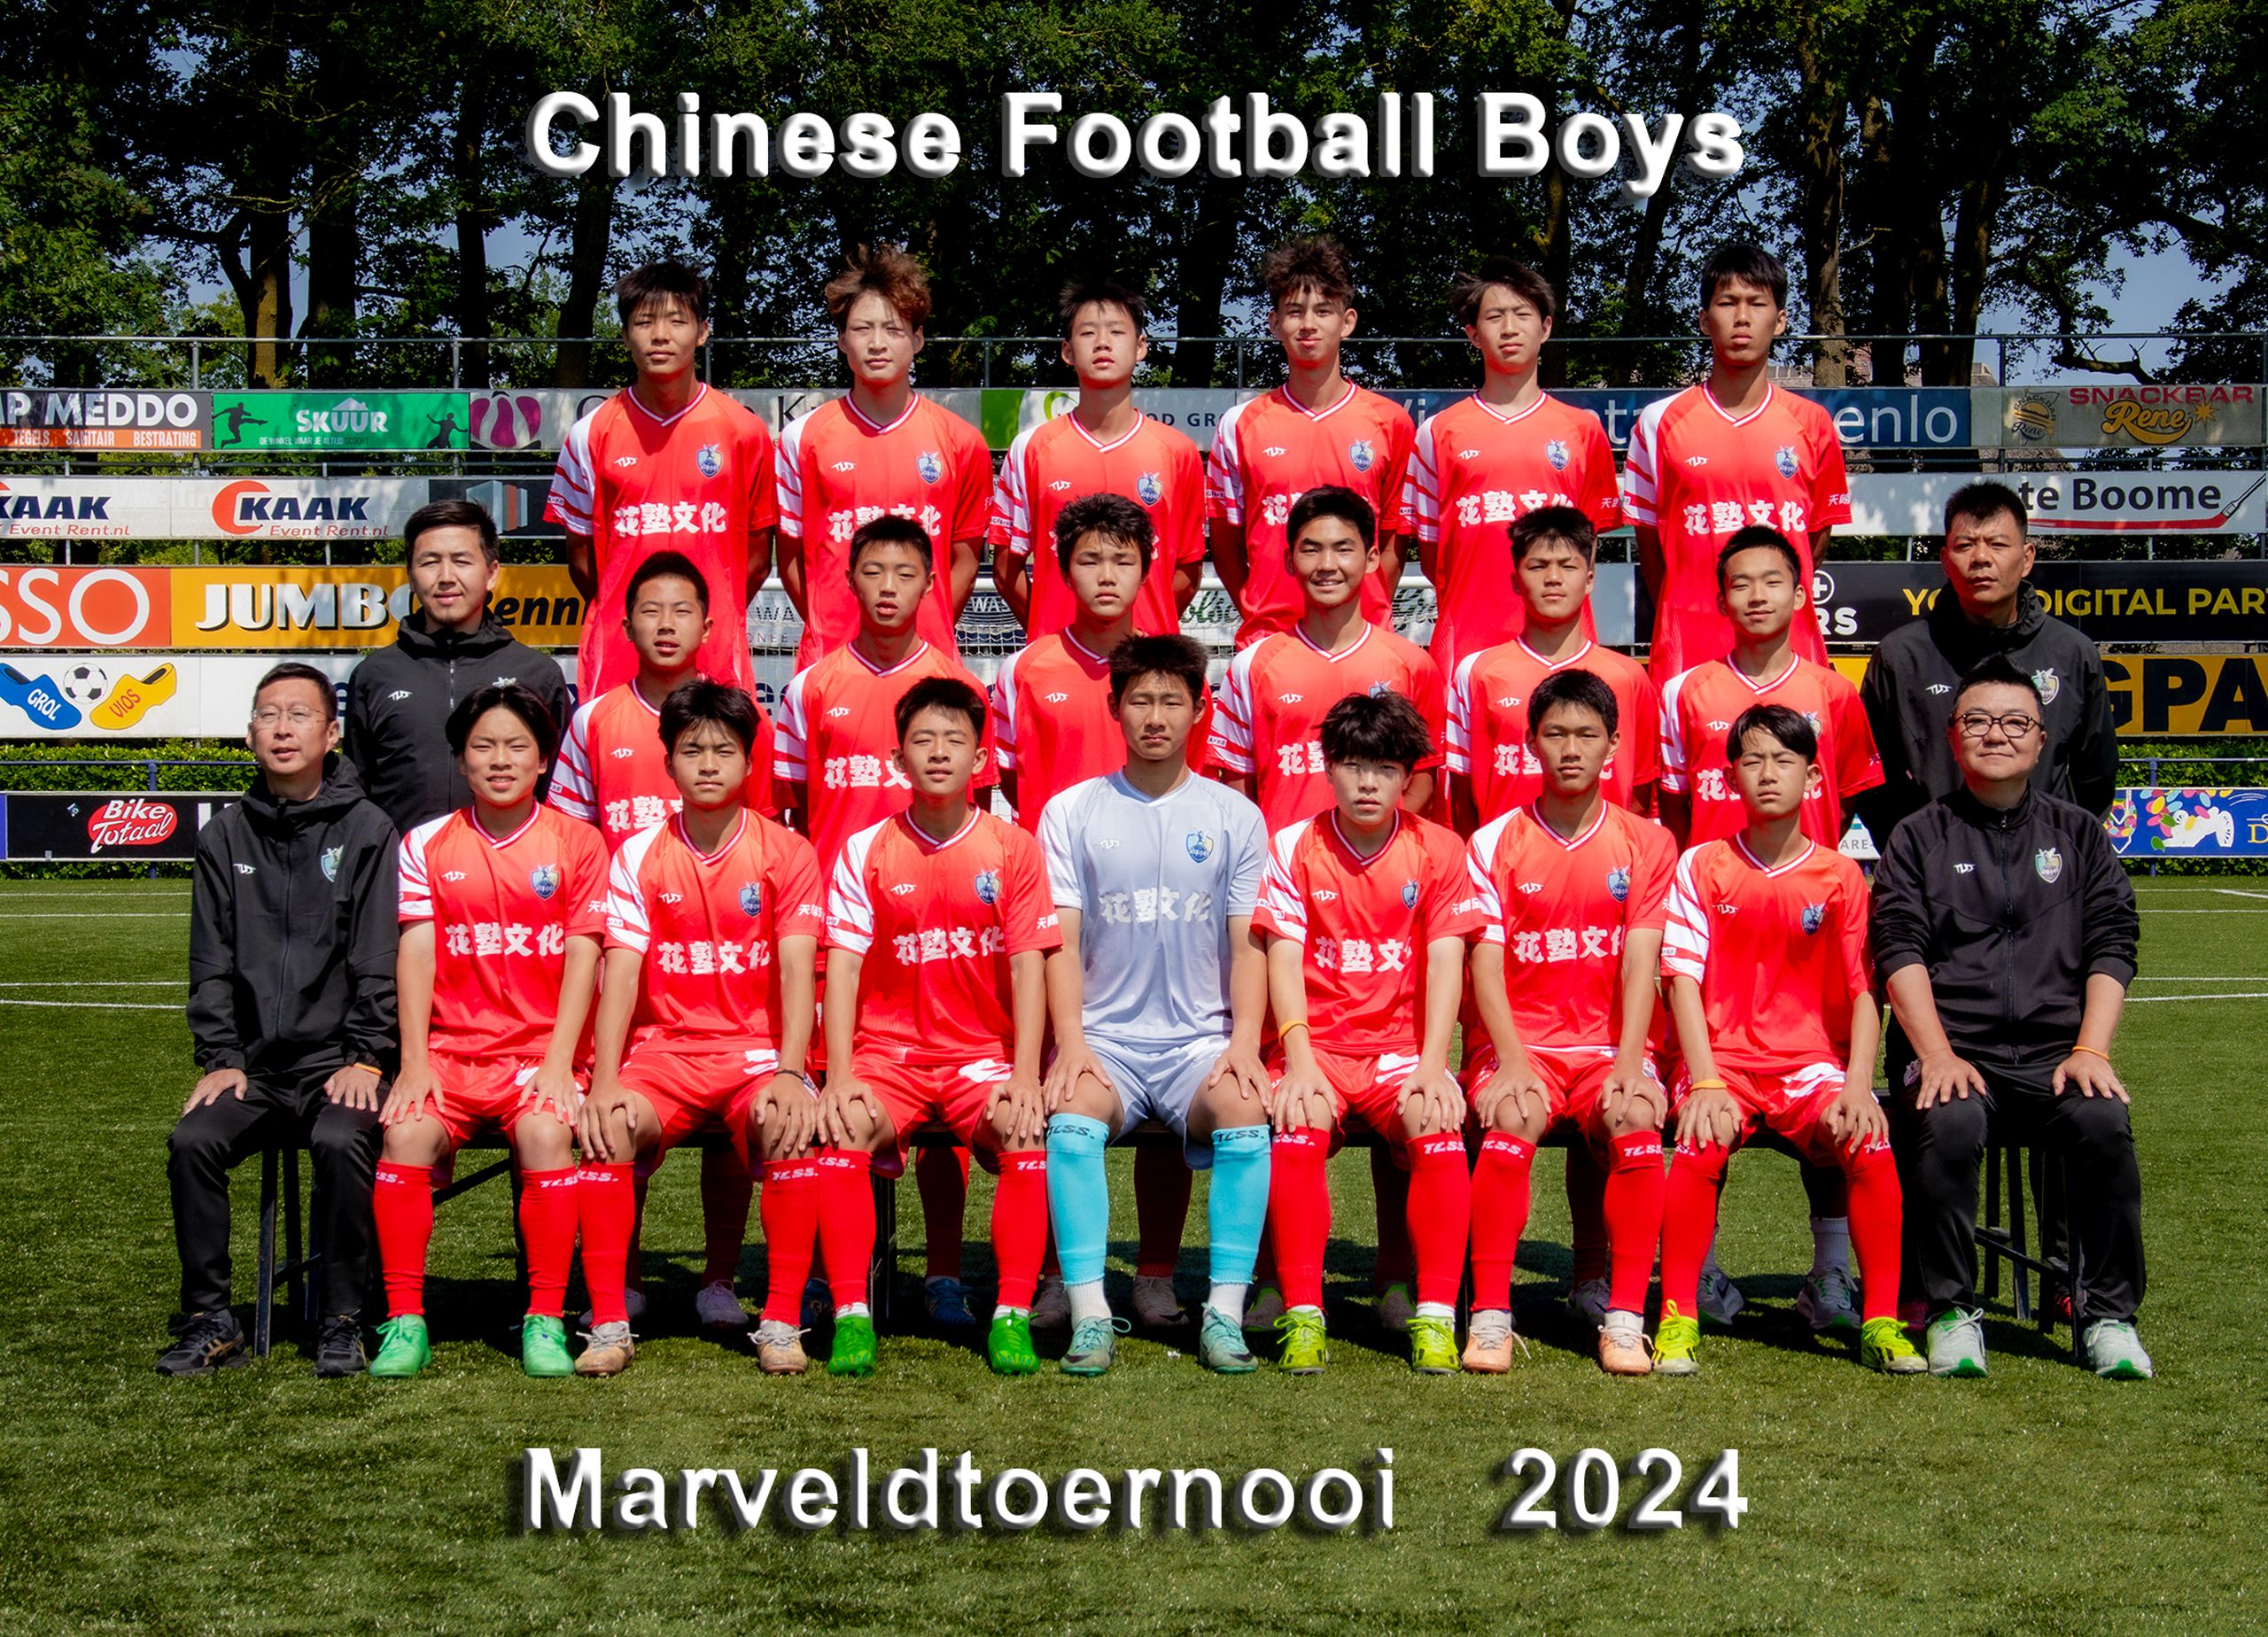 Marveld Tournament 2024 - Team Chinese Football Boys